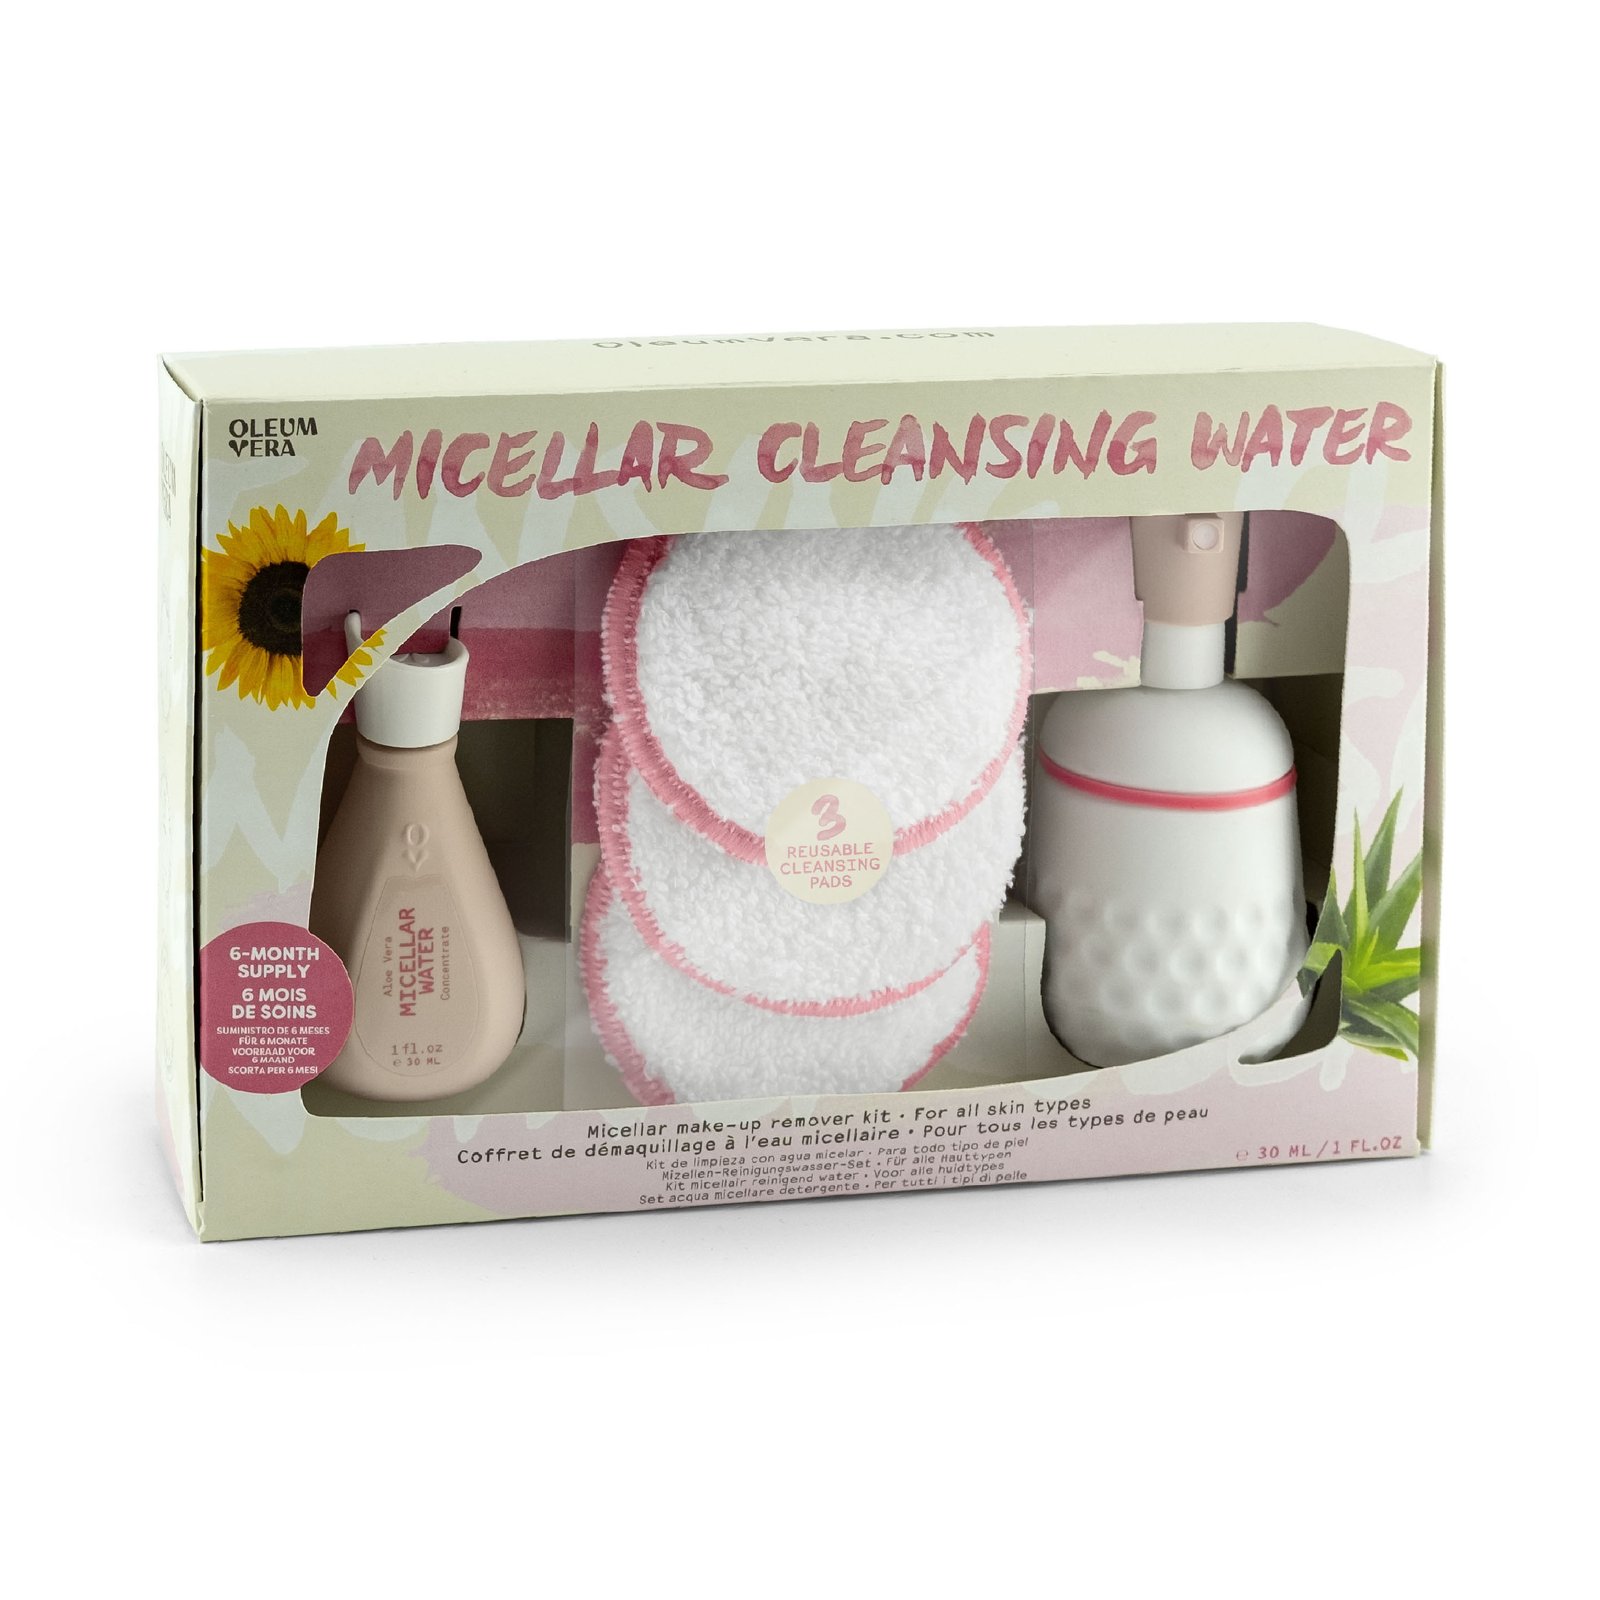 2021 Mothers Day Gift Guide Closetsamples natural micellar water kit